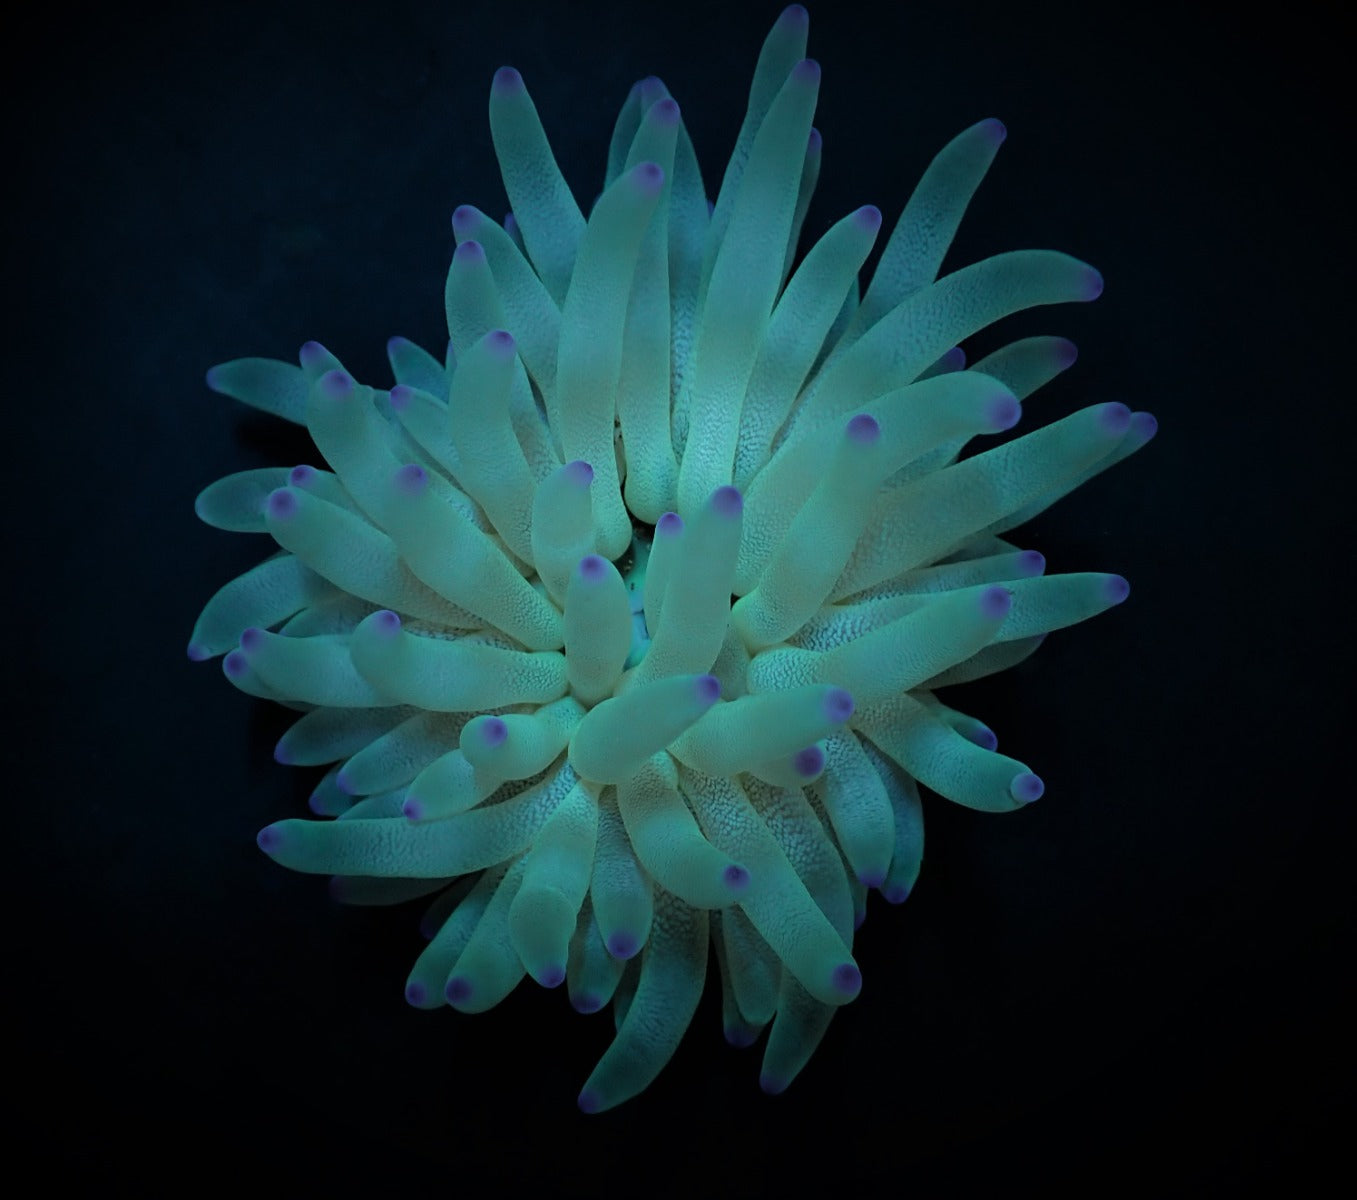 Condylactis gigantea (Pink tip) - Pink tipped Giant Sea anemone